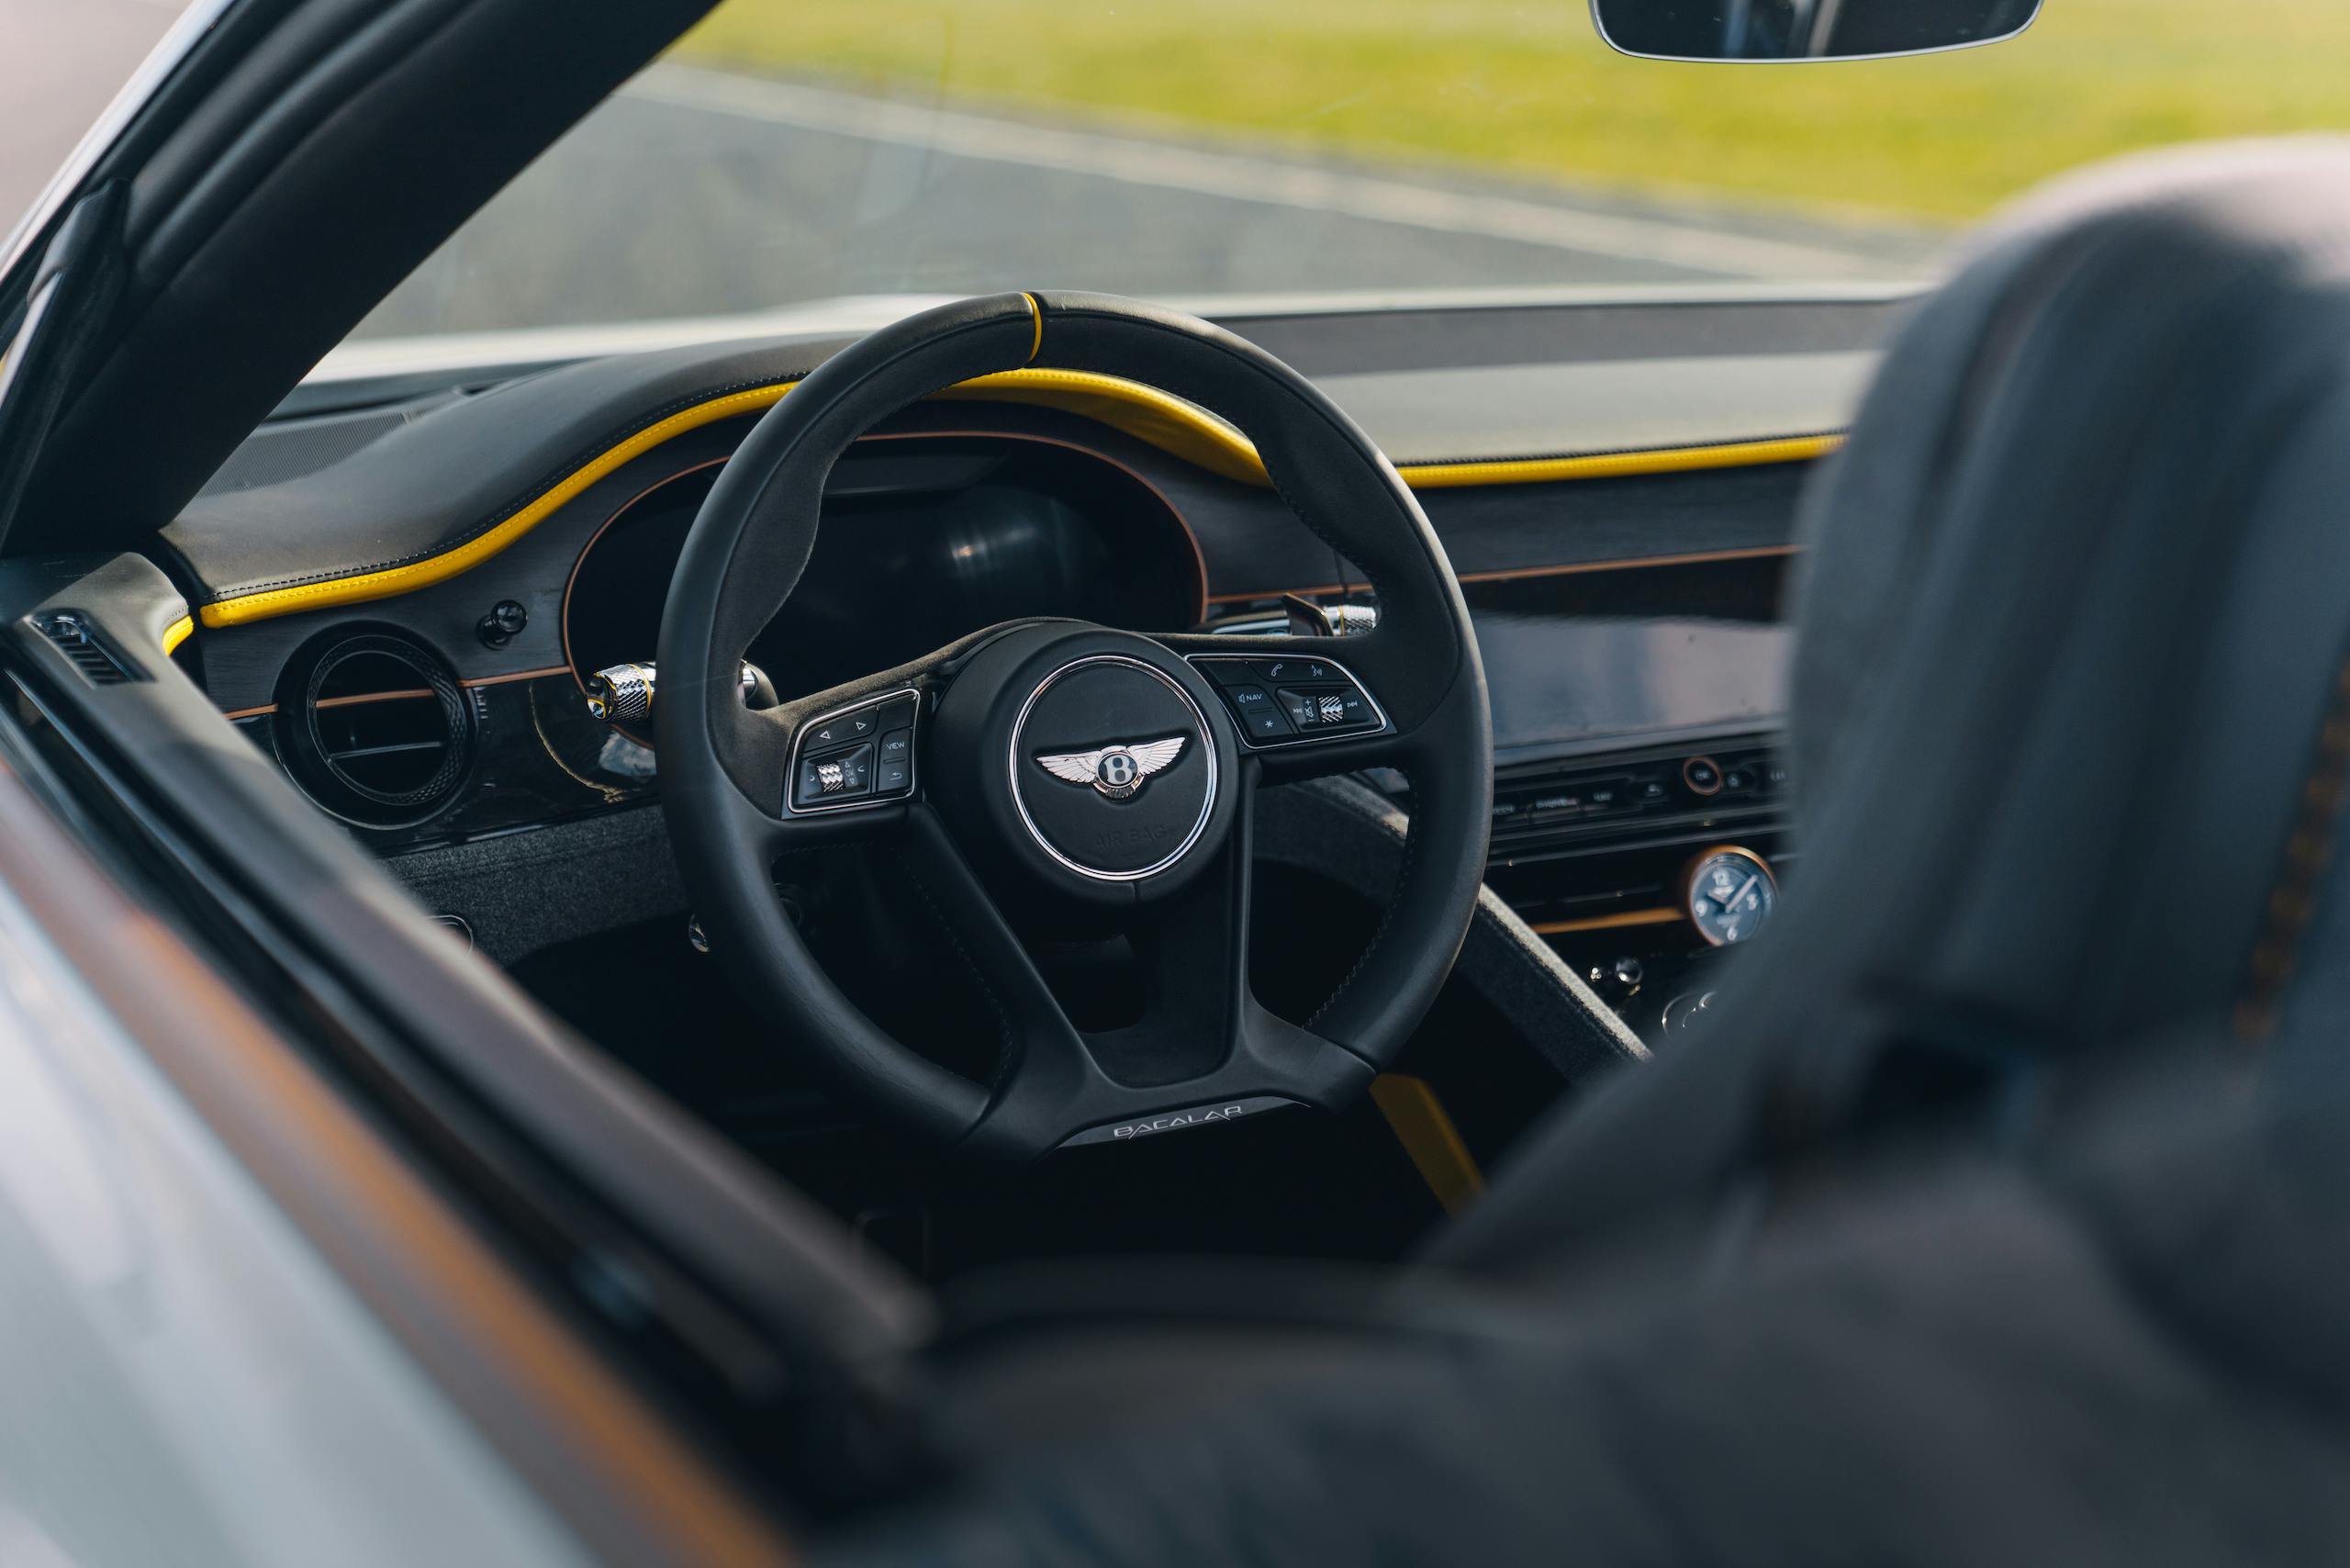 2021 Bentley Bacalar interior steering wheel